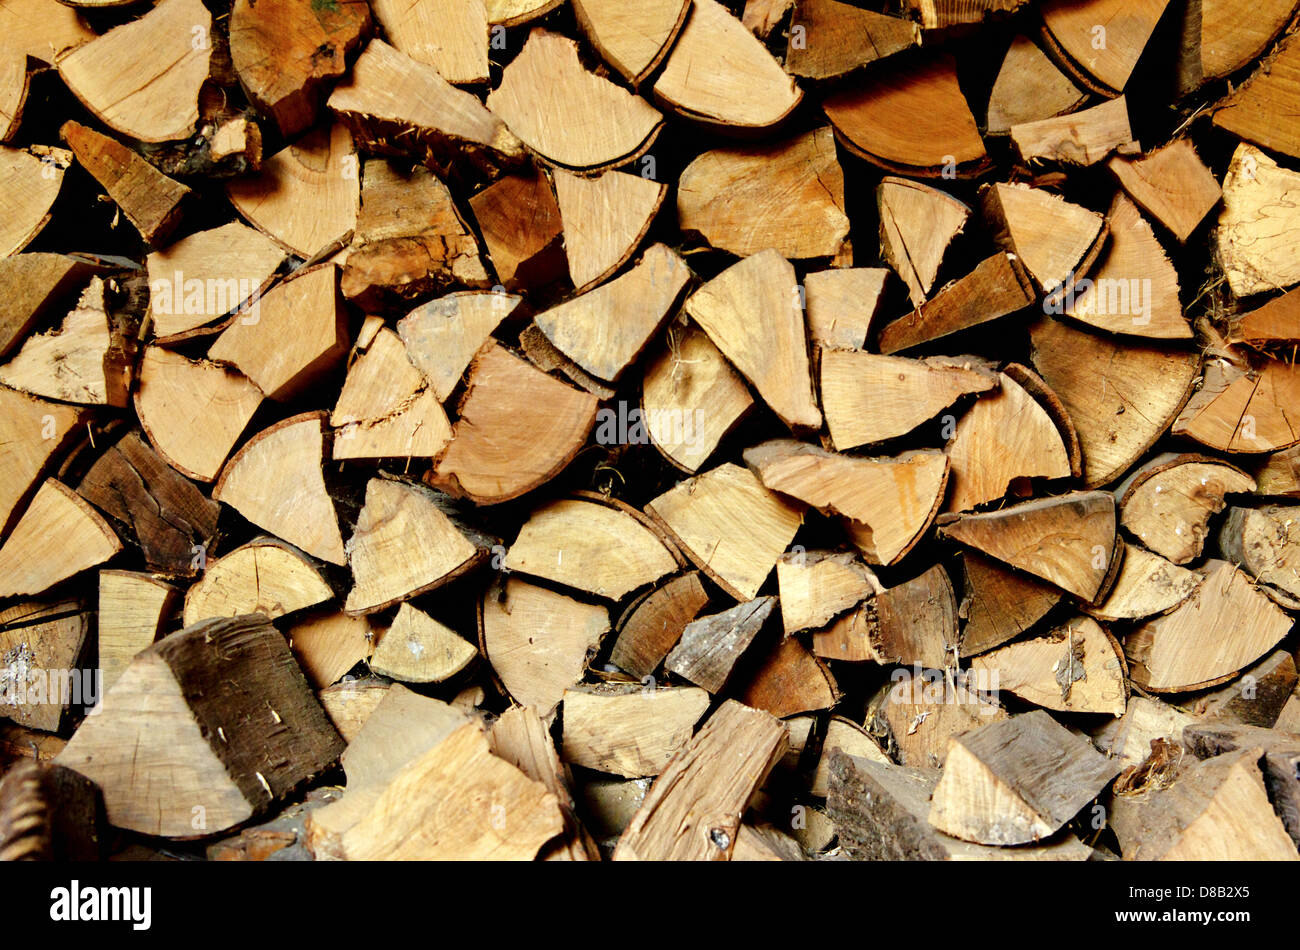 A staple of biomass, arranged firewood. Stock Photo